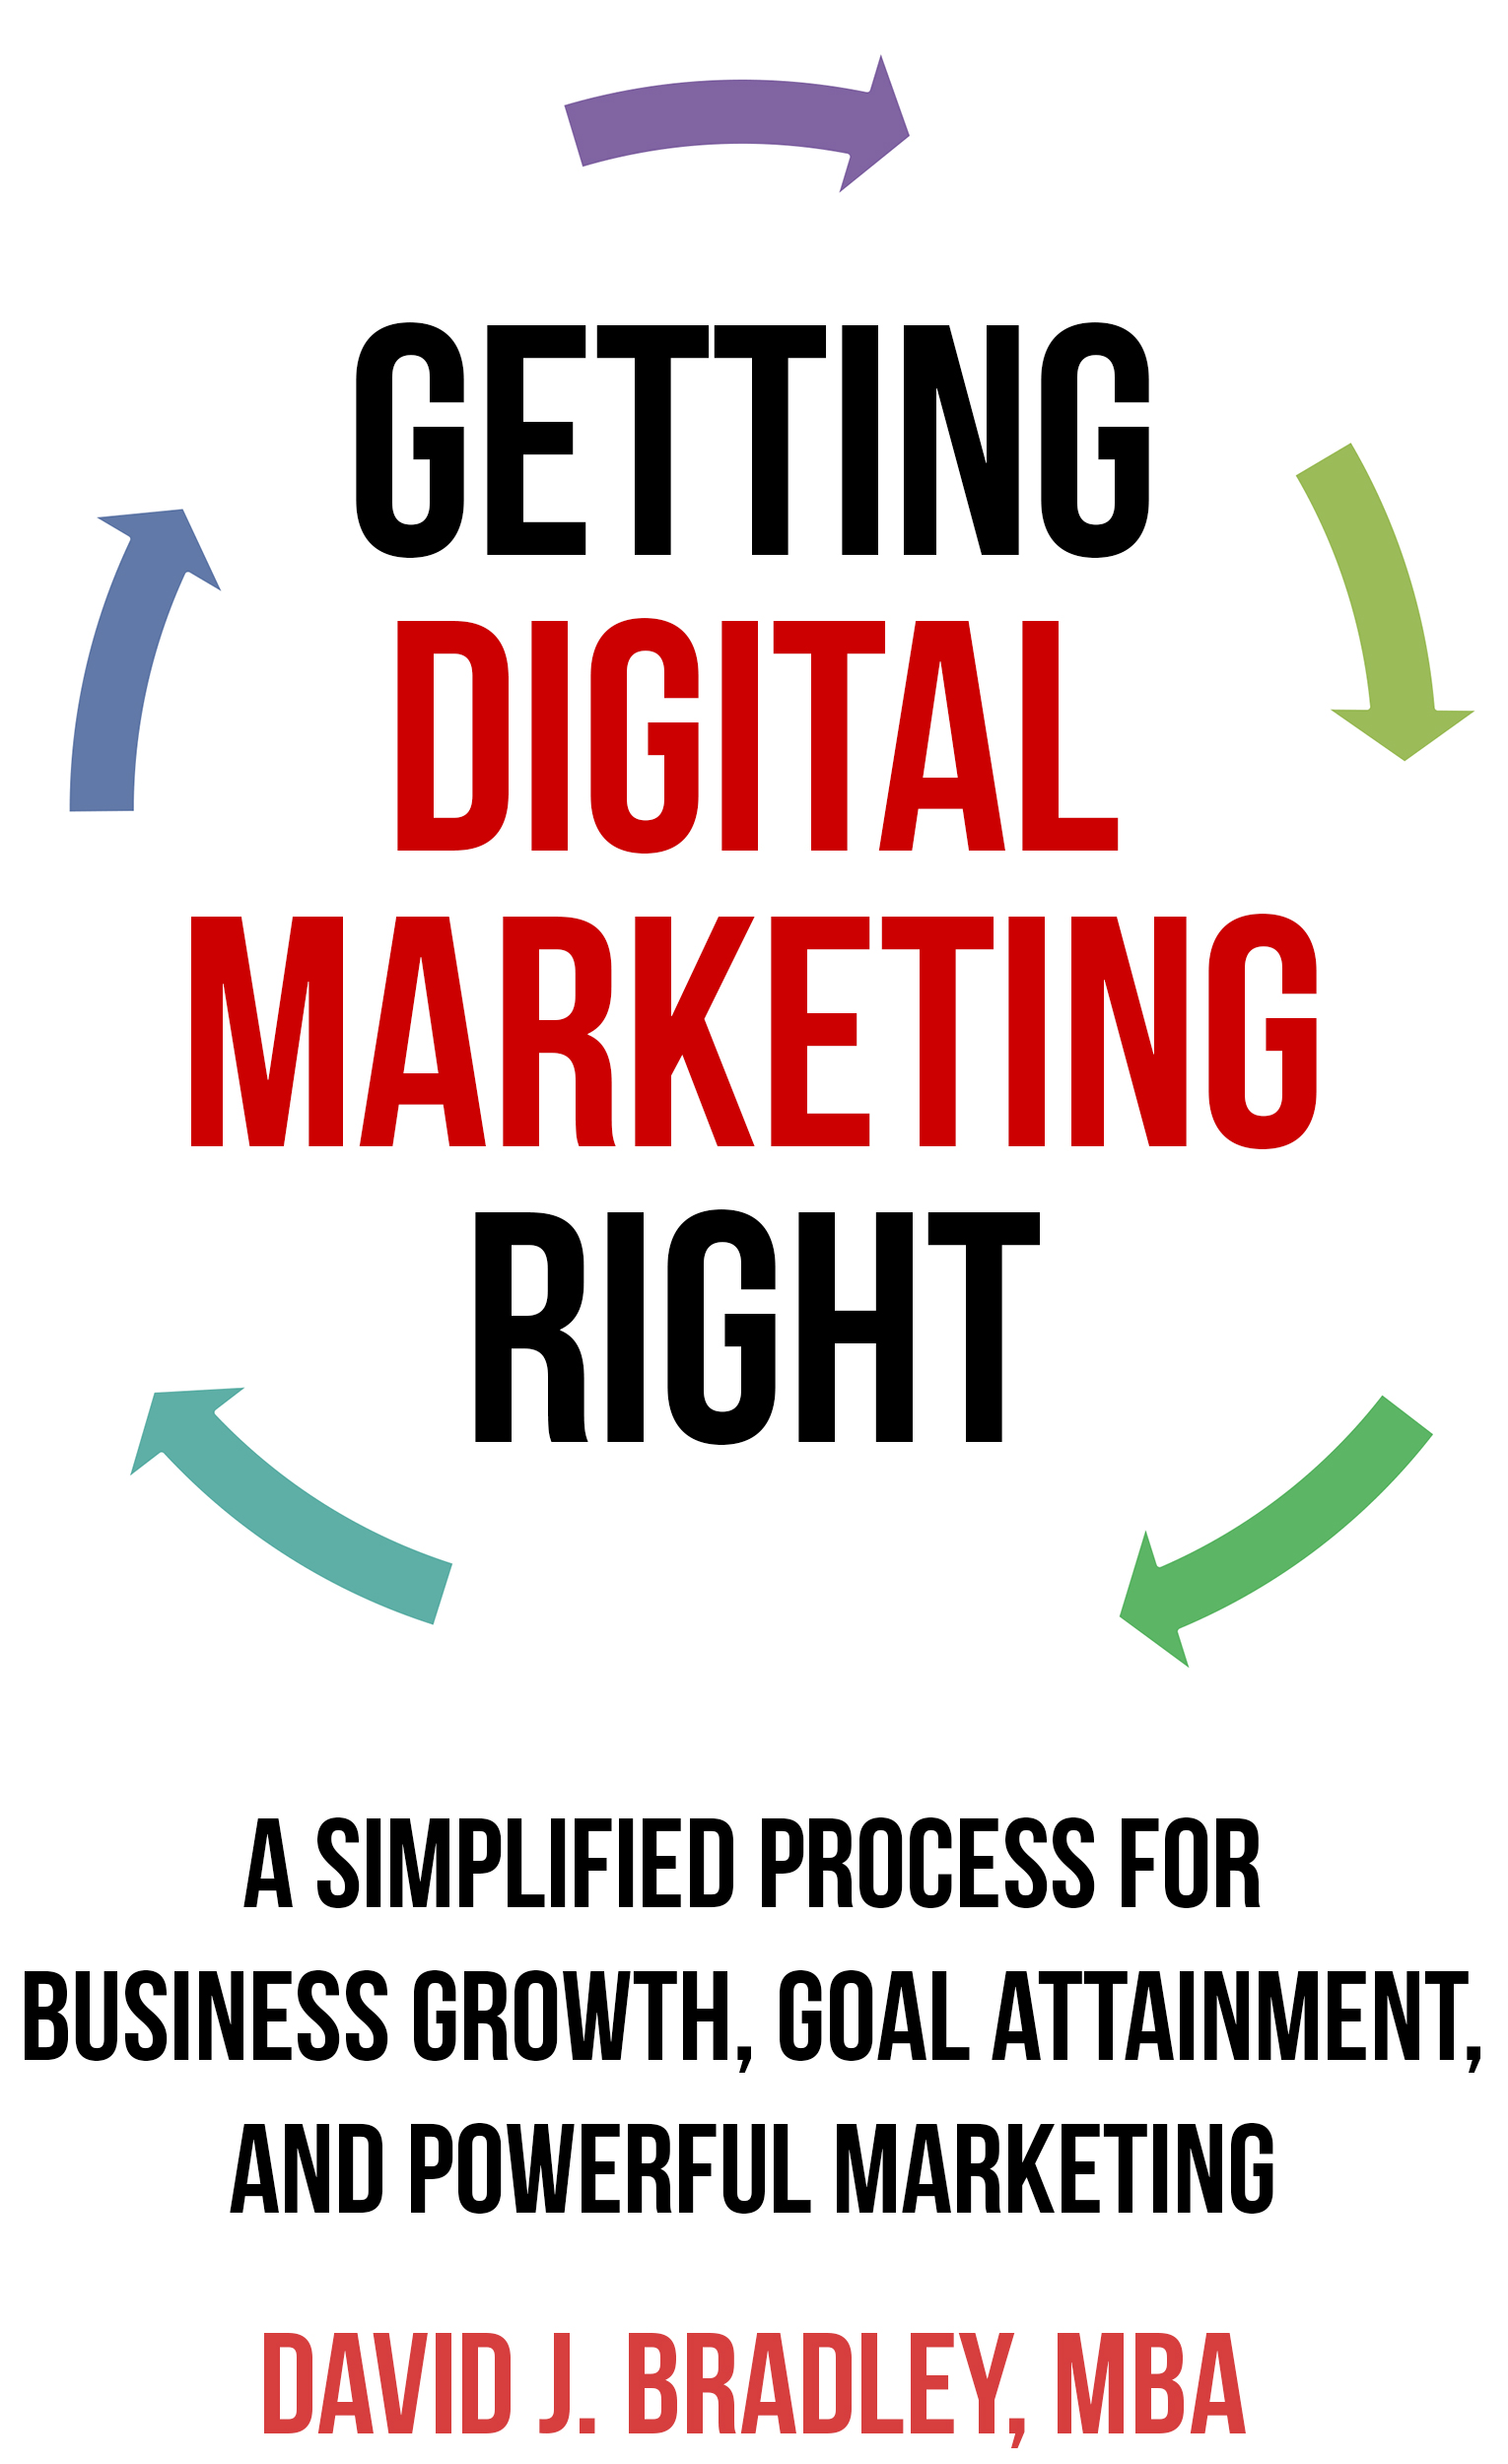 FREE: Getting Digital Marketing Right by David Bradley